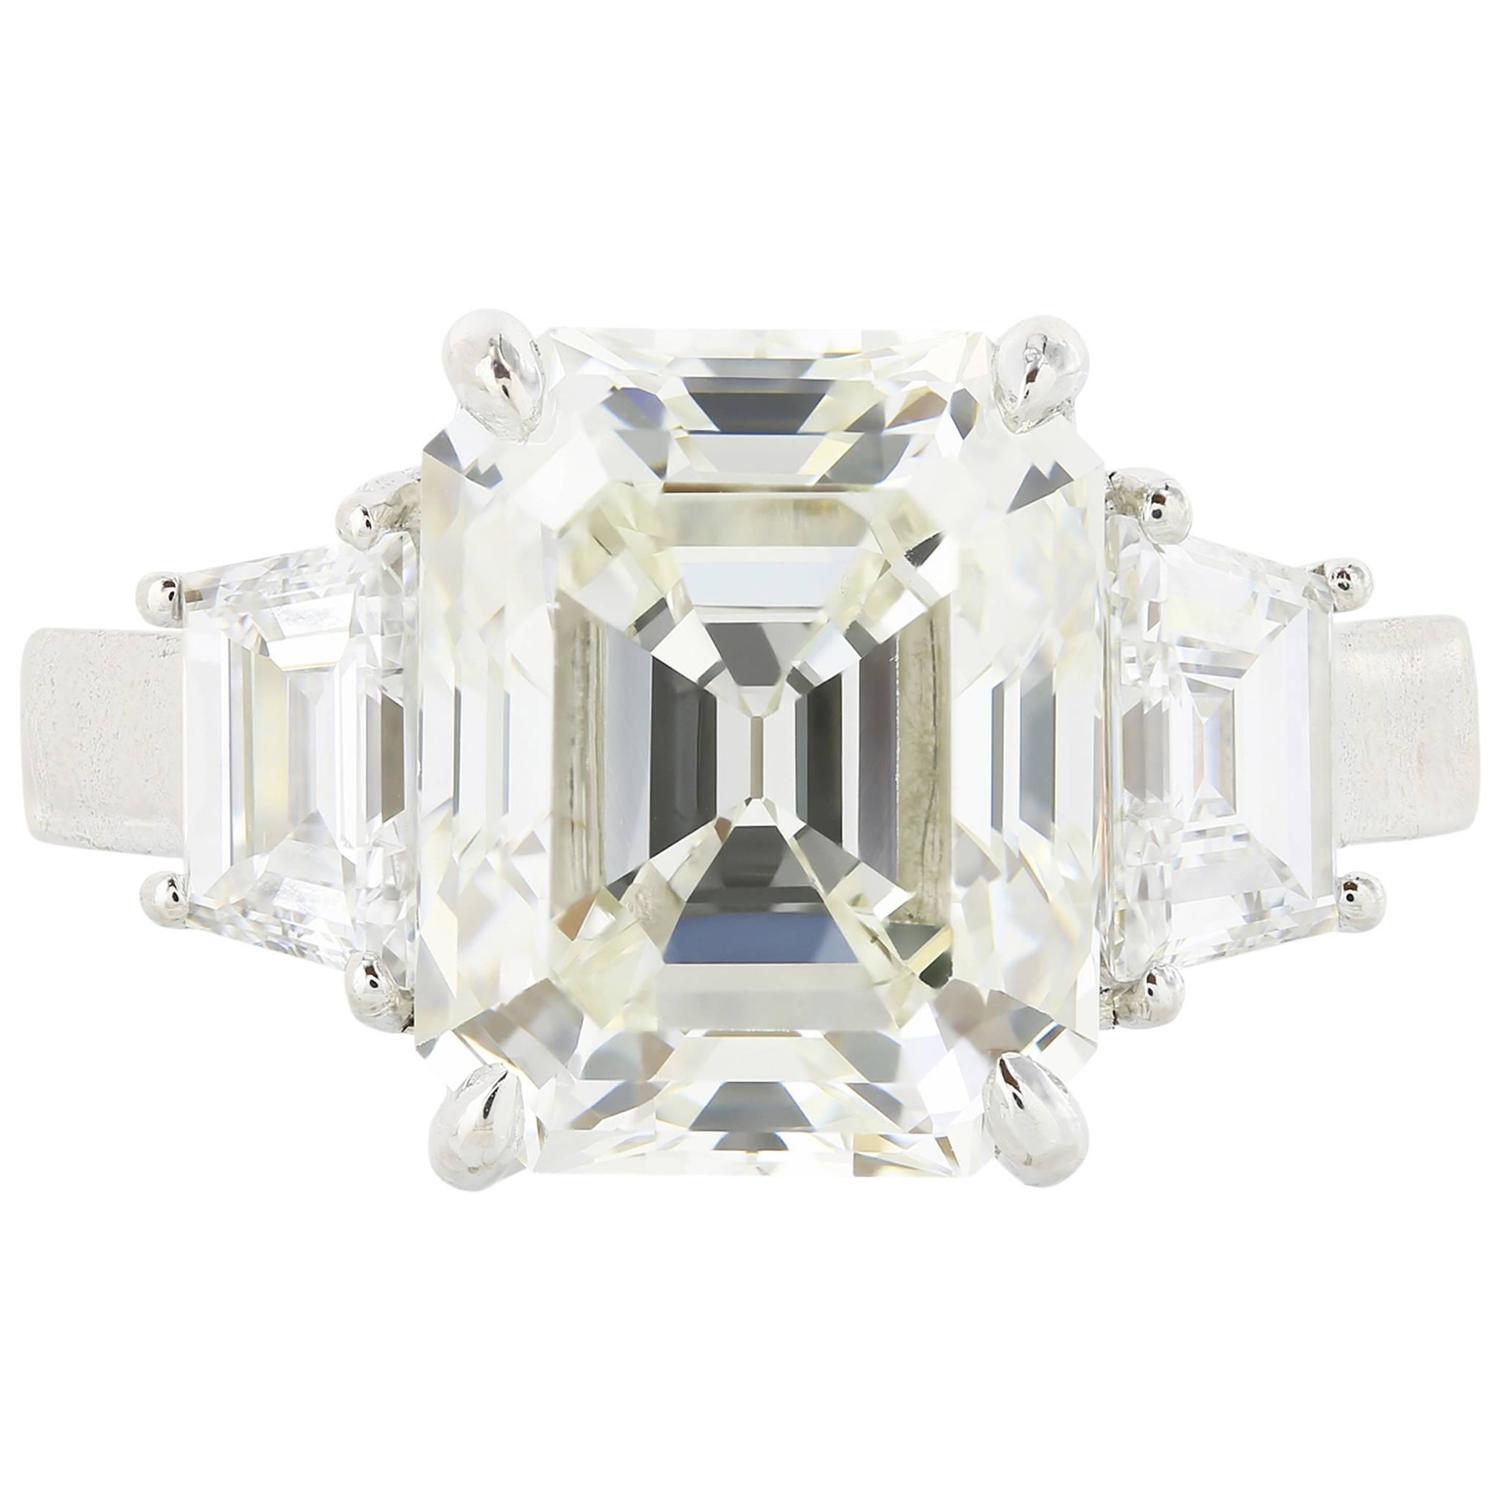 5.13 Carat Emerald Cut Diamond Platinum Ring For Sale at 1stdibs